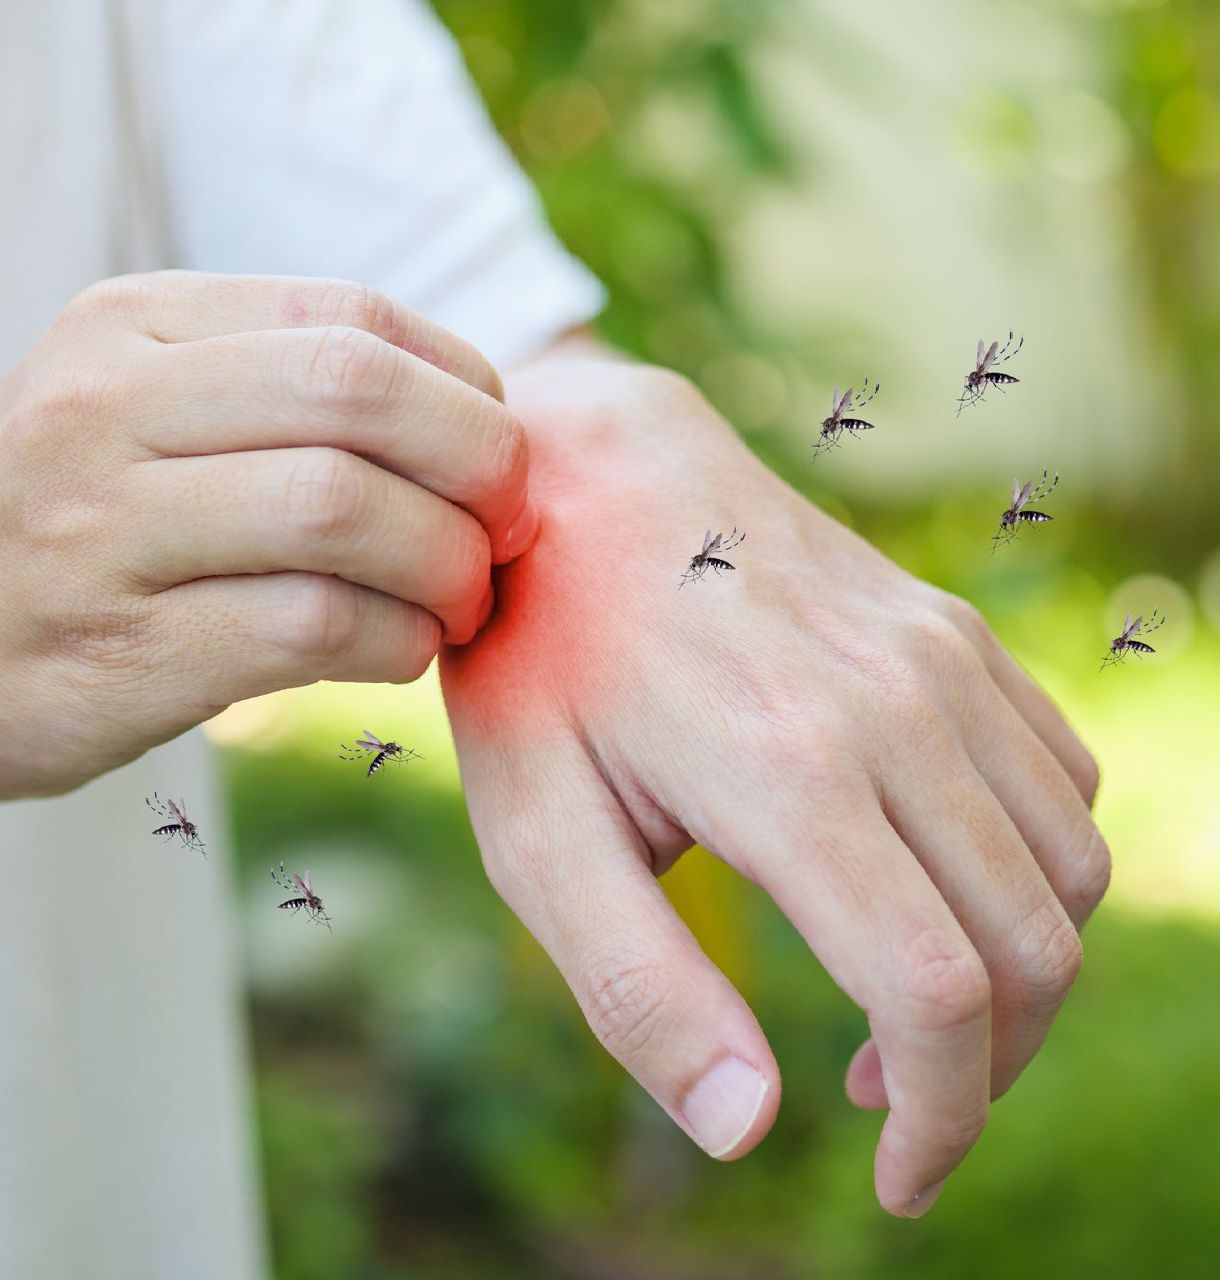 Mosquitos biting a hand